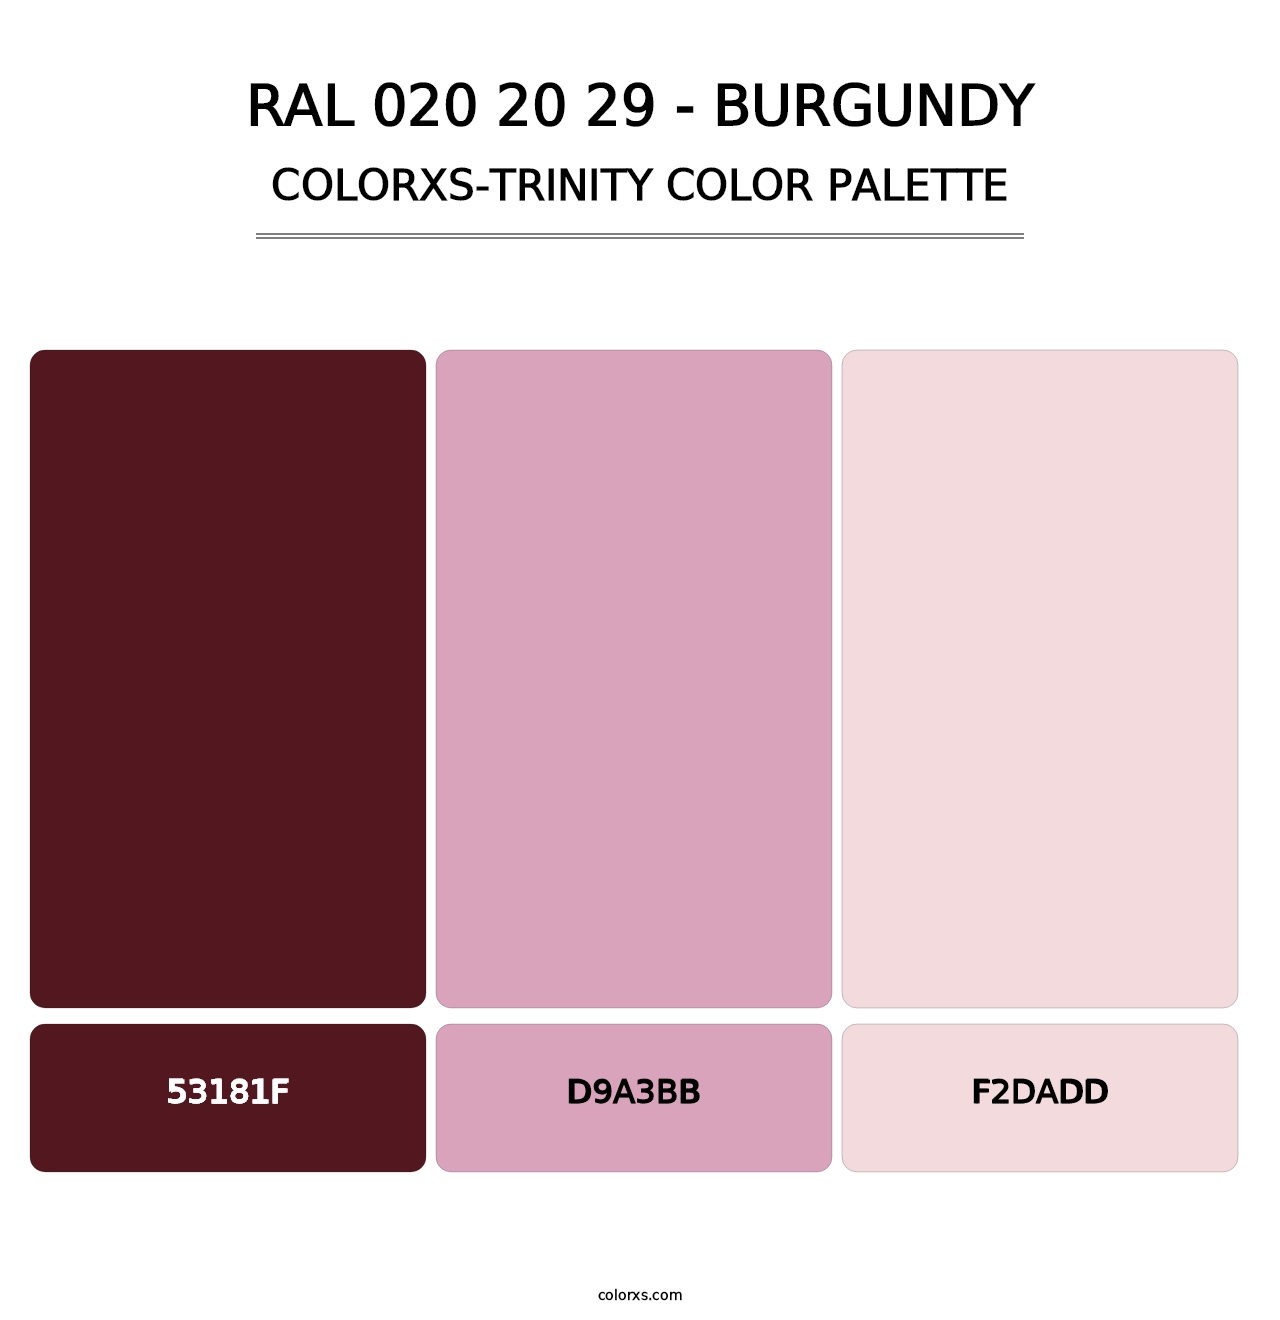 RAL 020 20 29 - Burgundy - Colorxs Trinity Palette